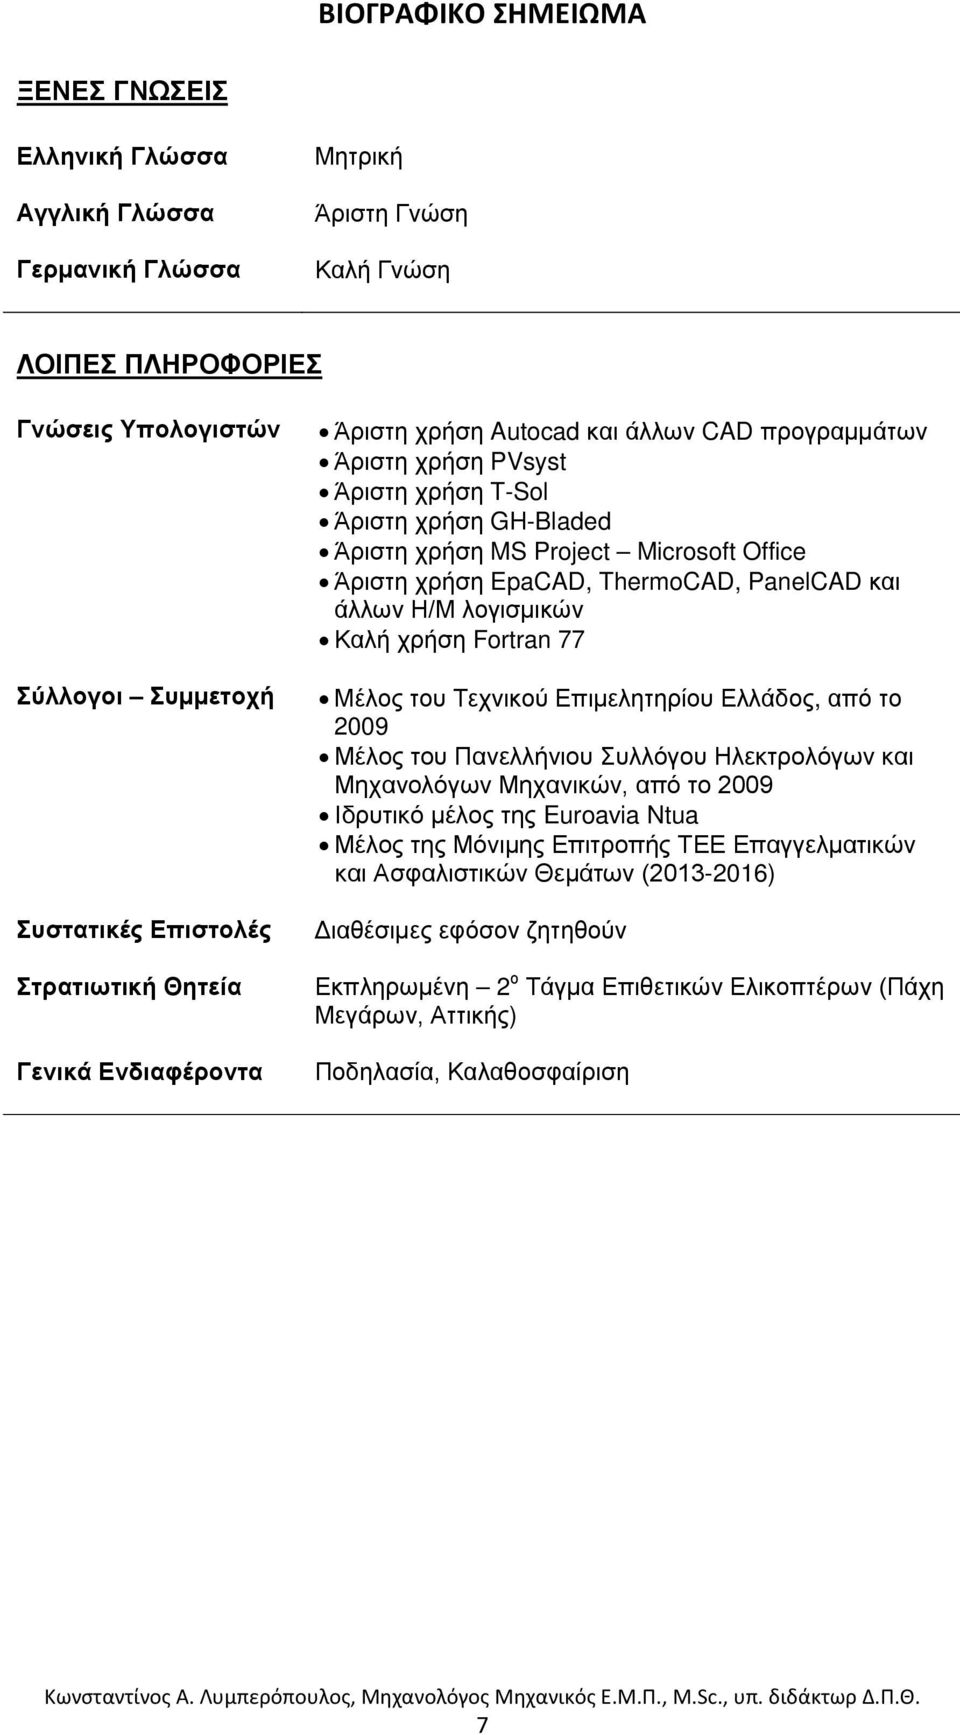 PanelCAD και άλλων Η/Μ λογισμικών Καλή χρήση Fortran 77 Μέλος του Τεχνικού Επιμελητηρίου Ελλάδος, από το 2009 Μέλος του Πανελλήνιου Συλλόγου Ηλεκτρολόγων και Μηχανολόγων Μηχανικών, από το 2009